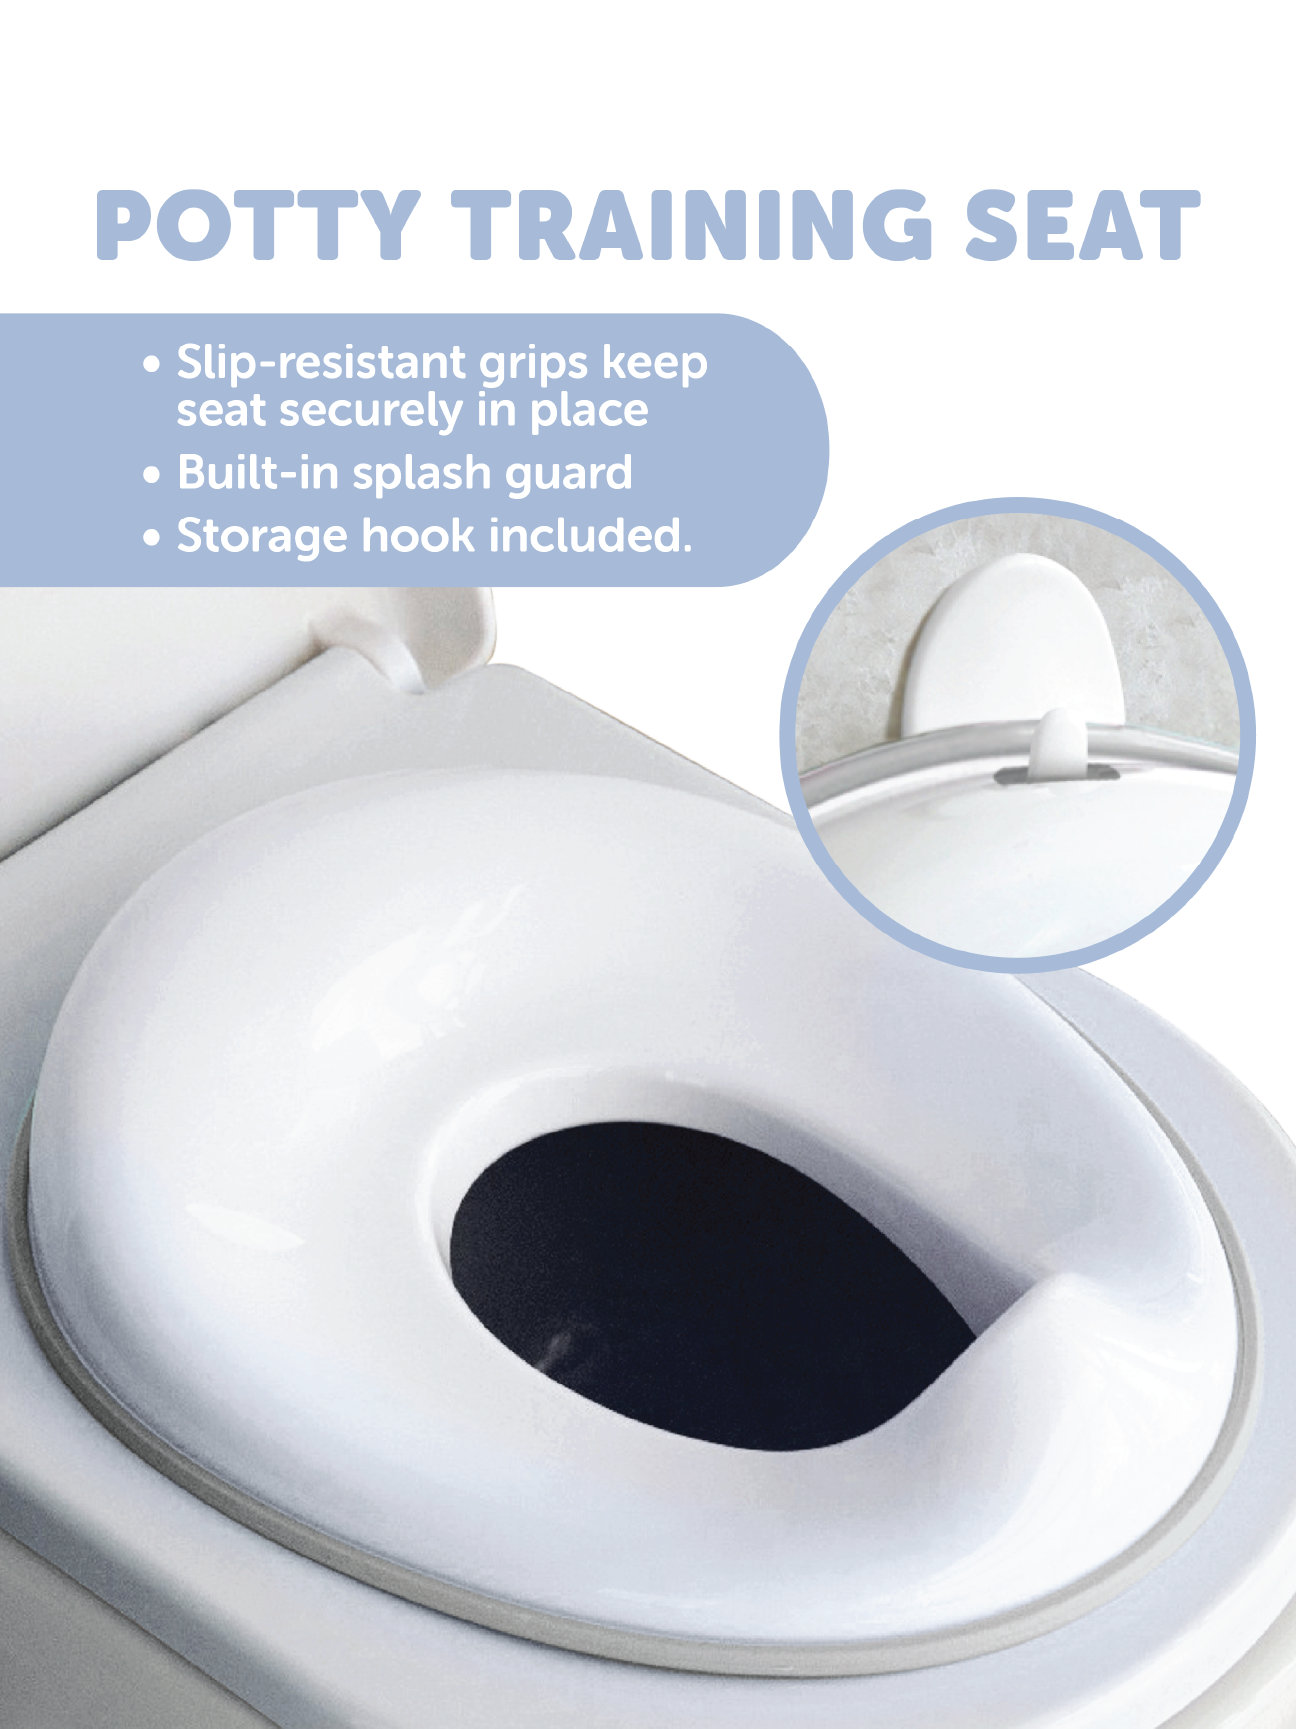 3-Piece Potty Training Kit - Gray